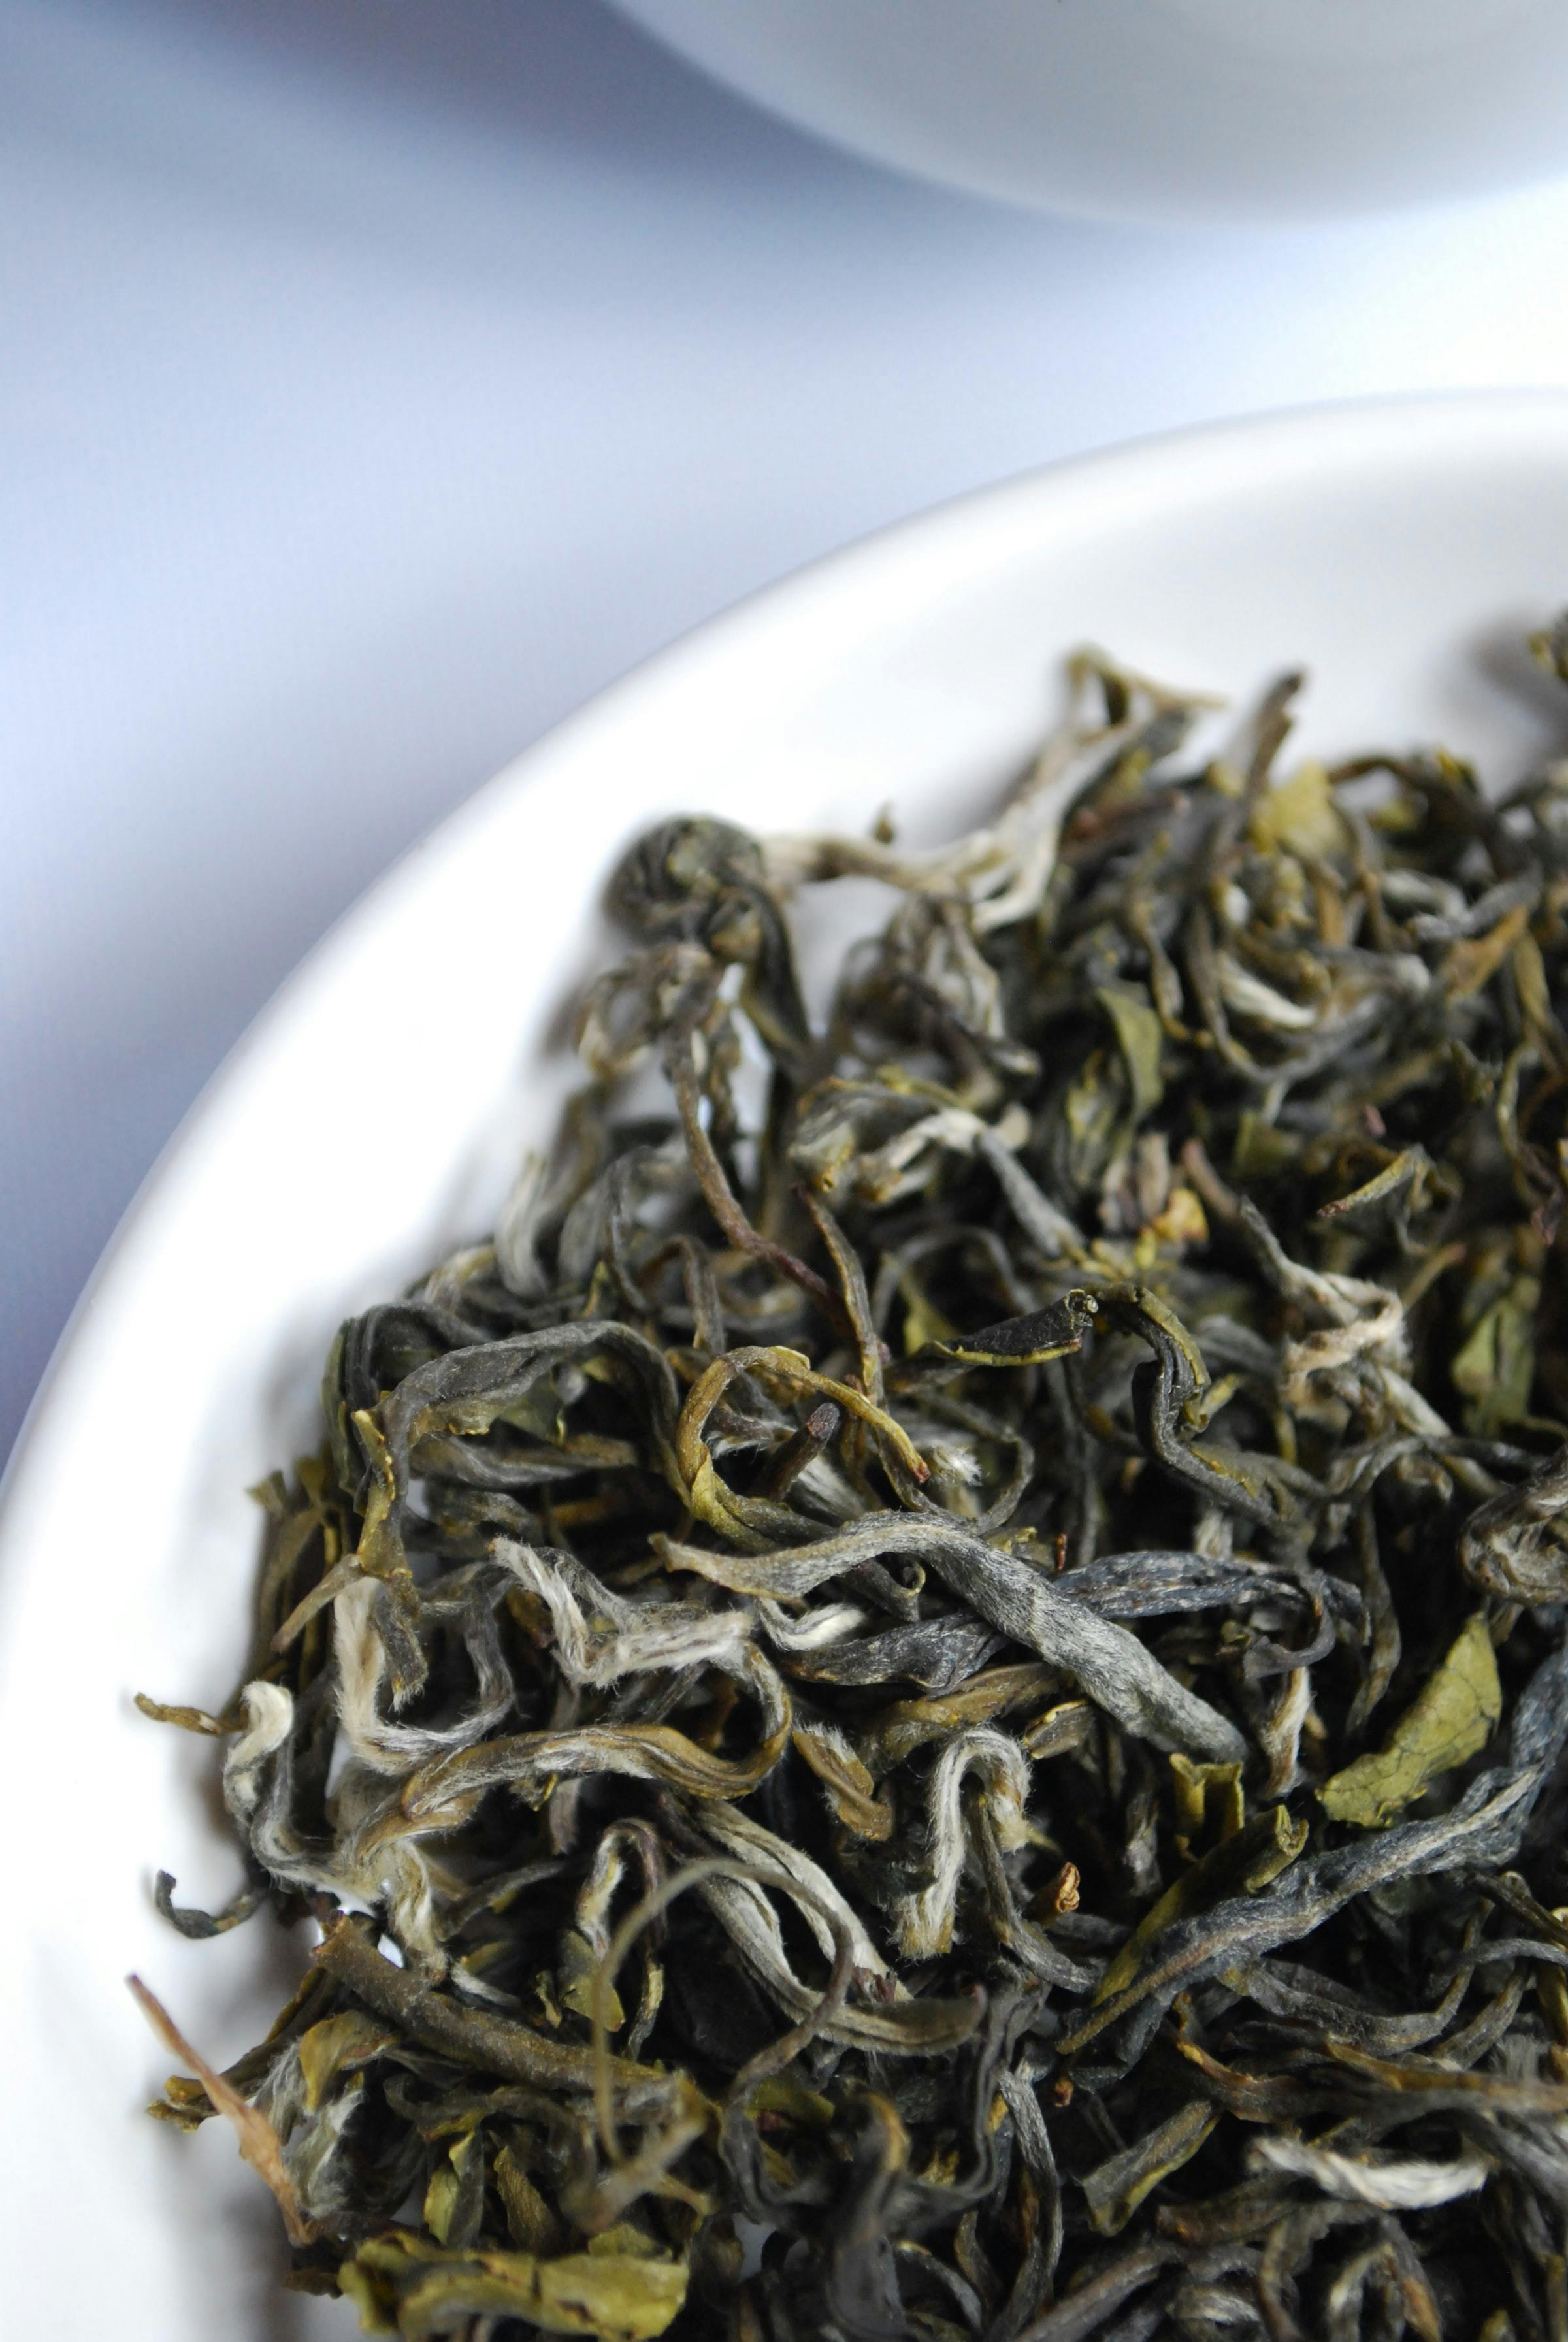 Background image - white tea leaves